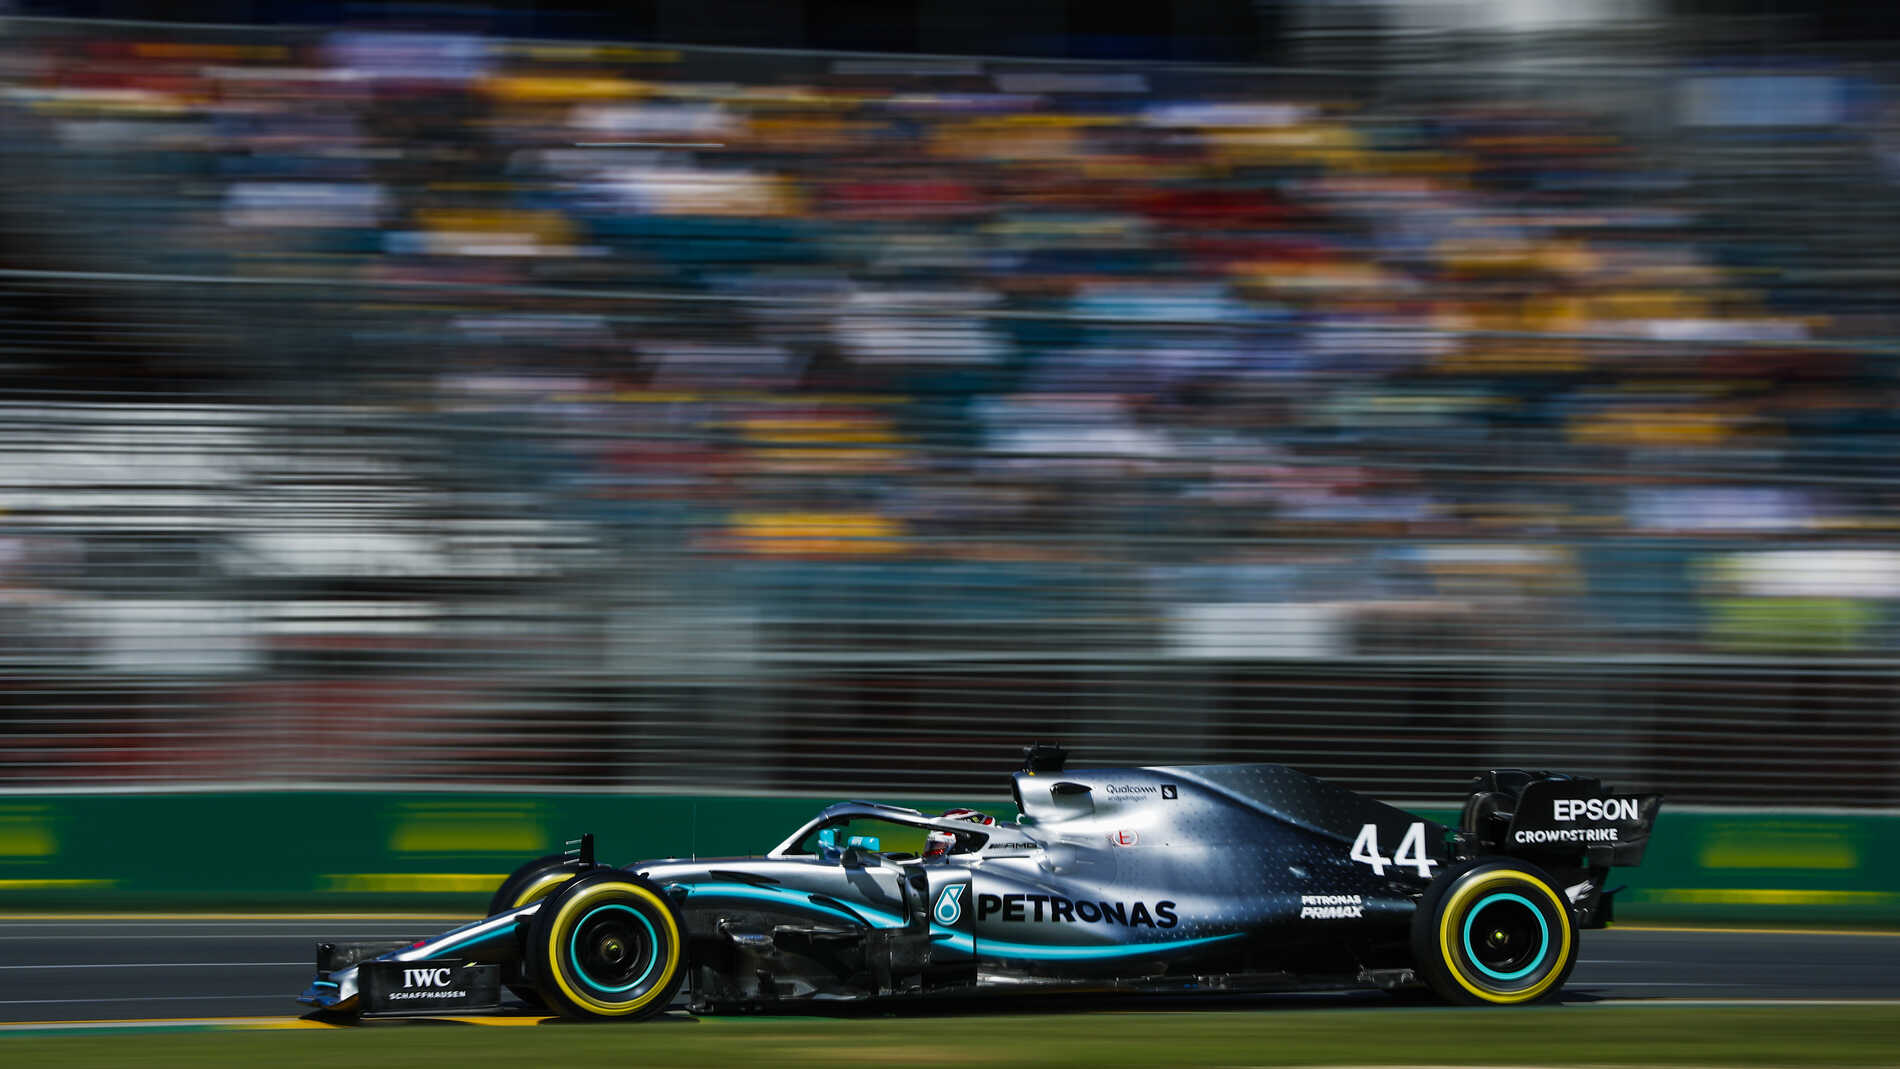 Australian Grand Prix 2019 FP2 & highlights: Hamilton heads Bottas as Mercedes go clear of the field | Formula